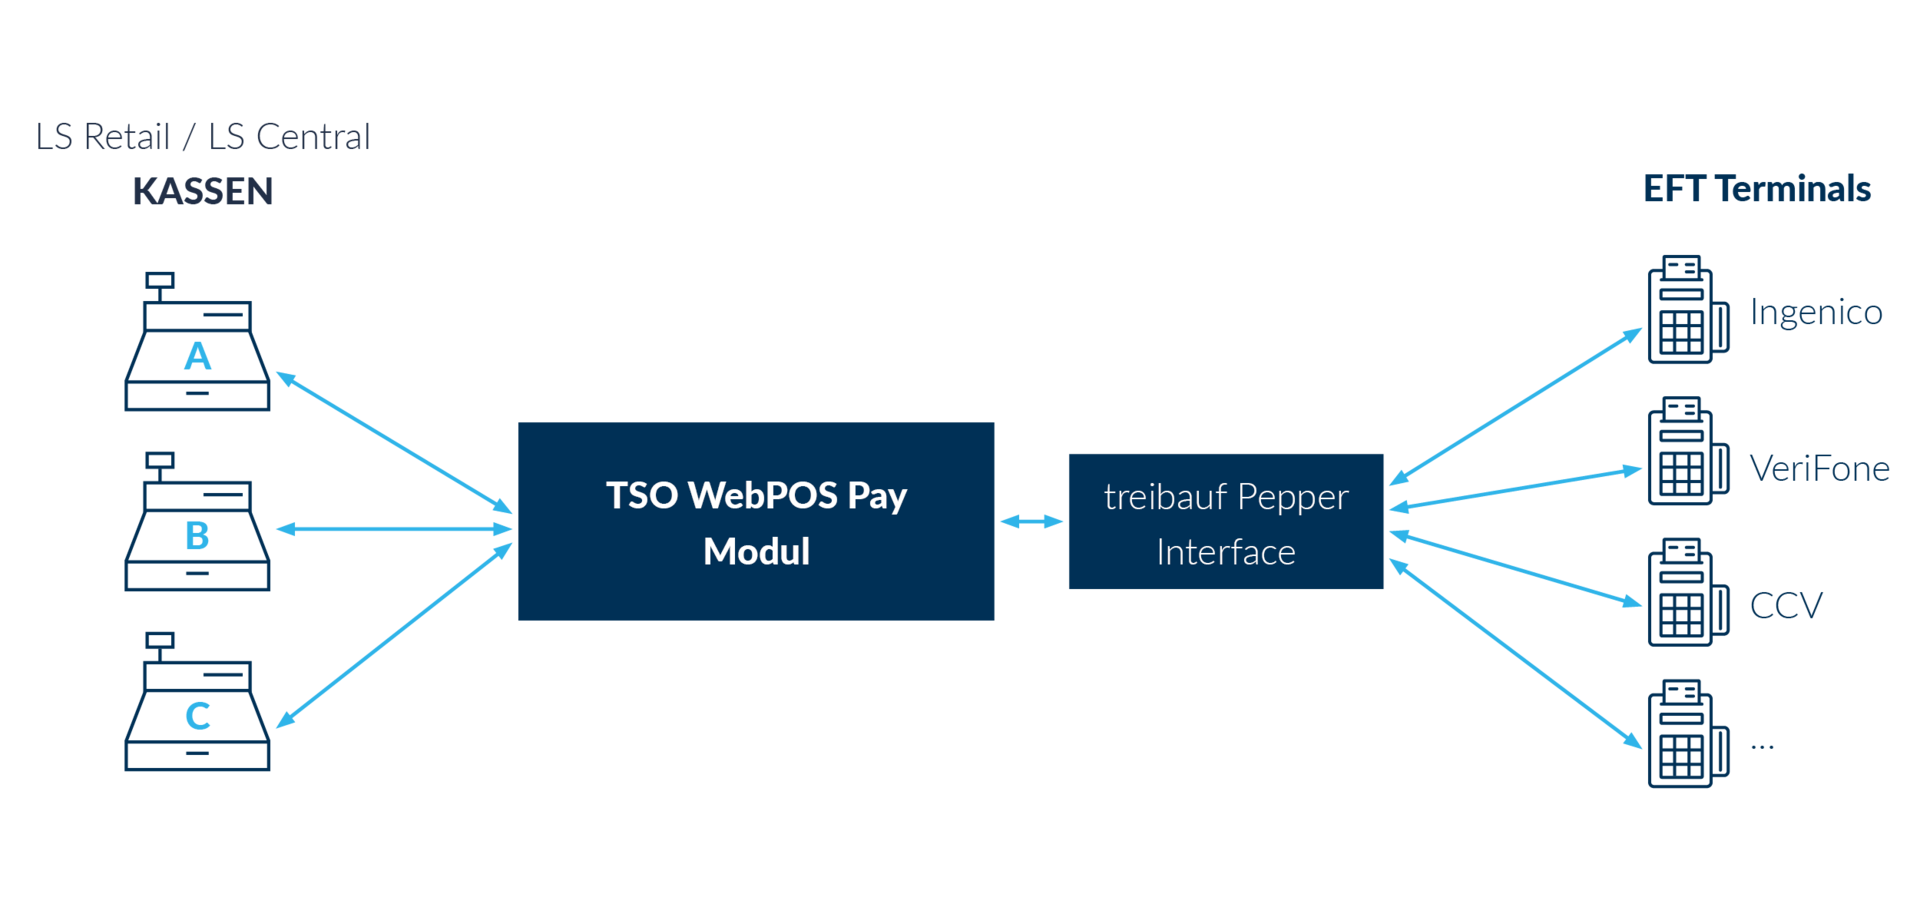 How does TSO WebPOS Pay work?